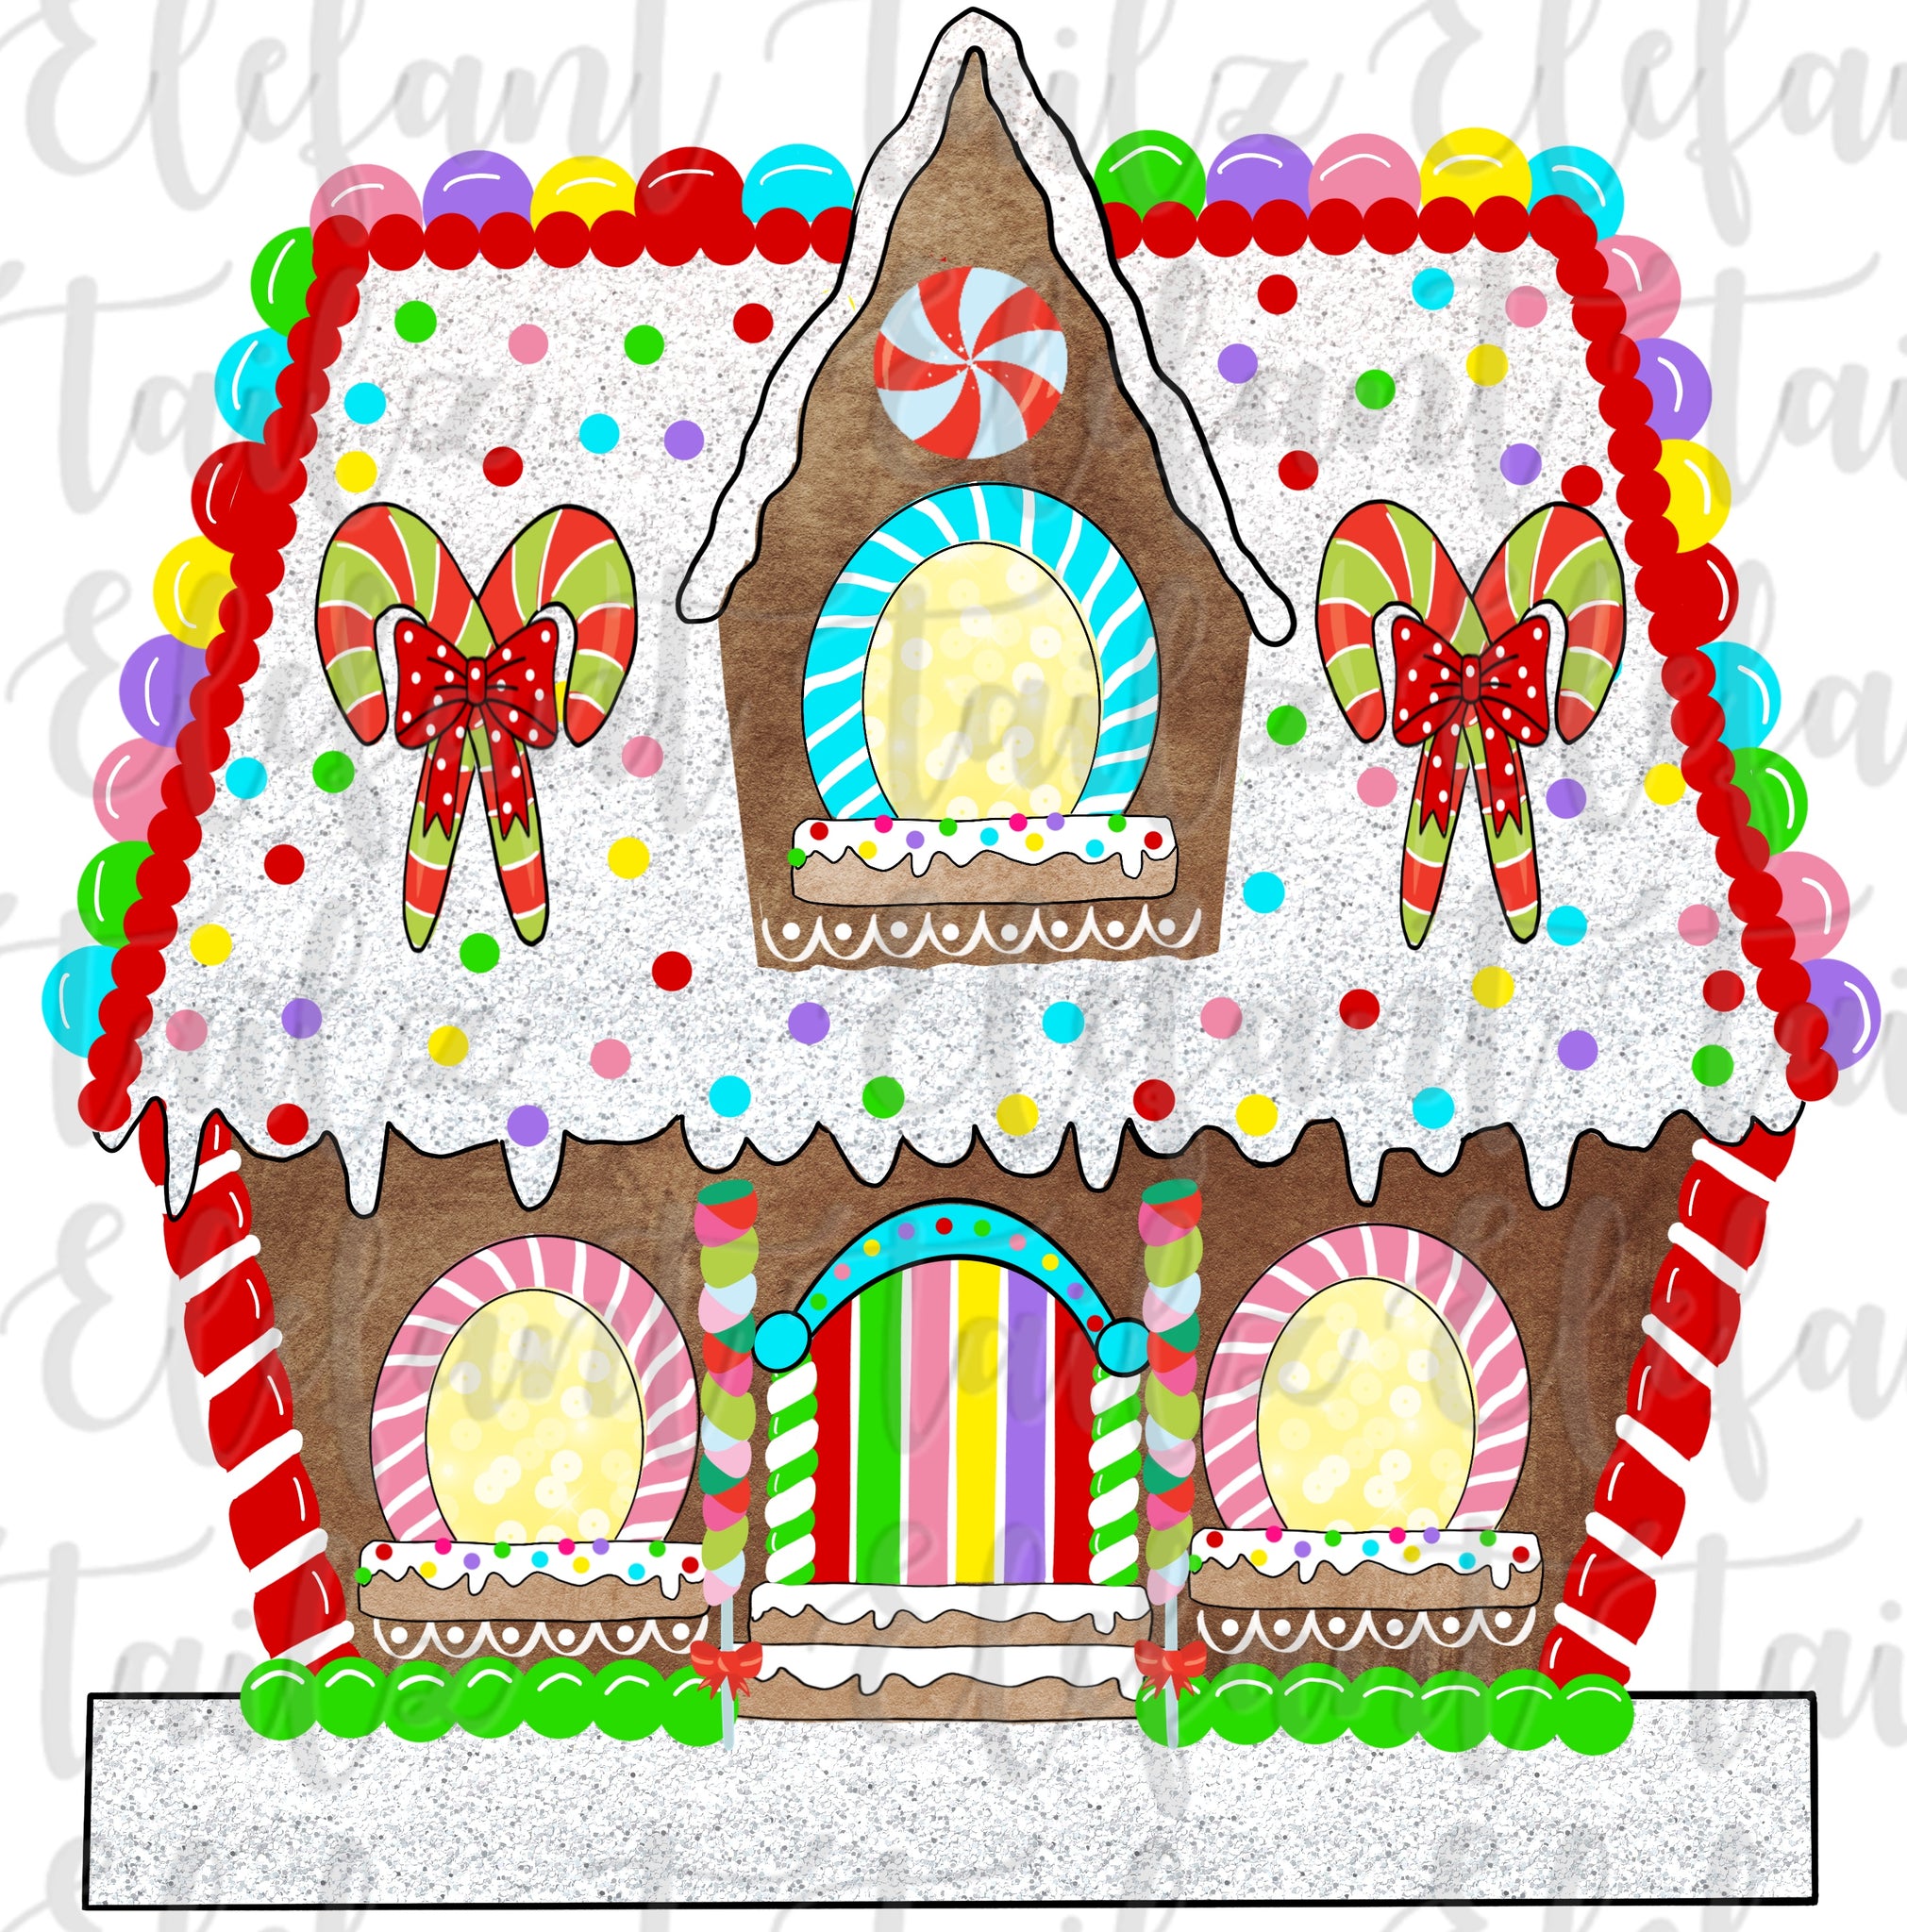 Gingerbread House 3 Windows - Blank